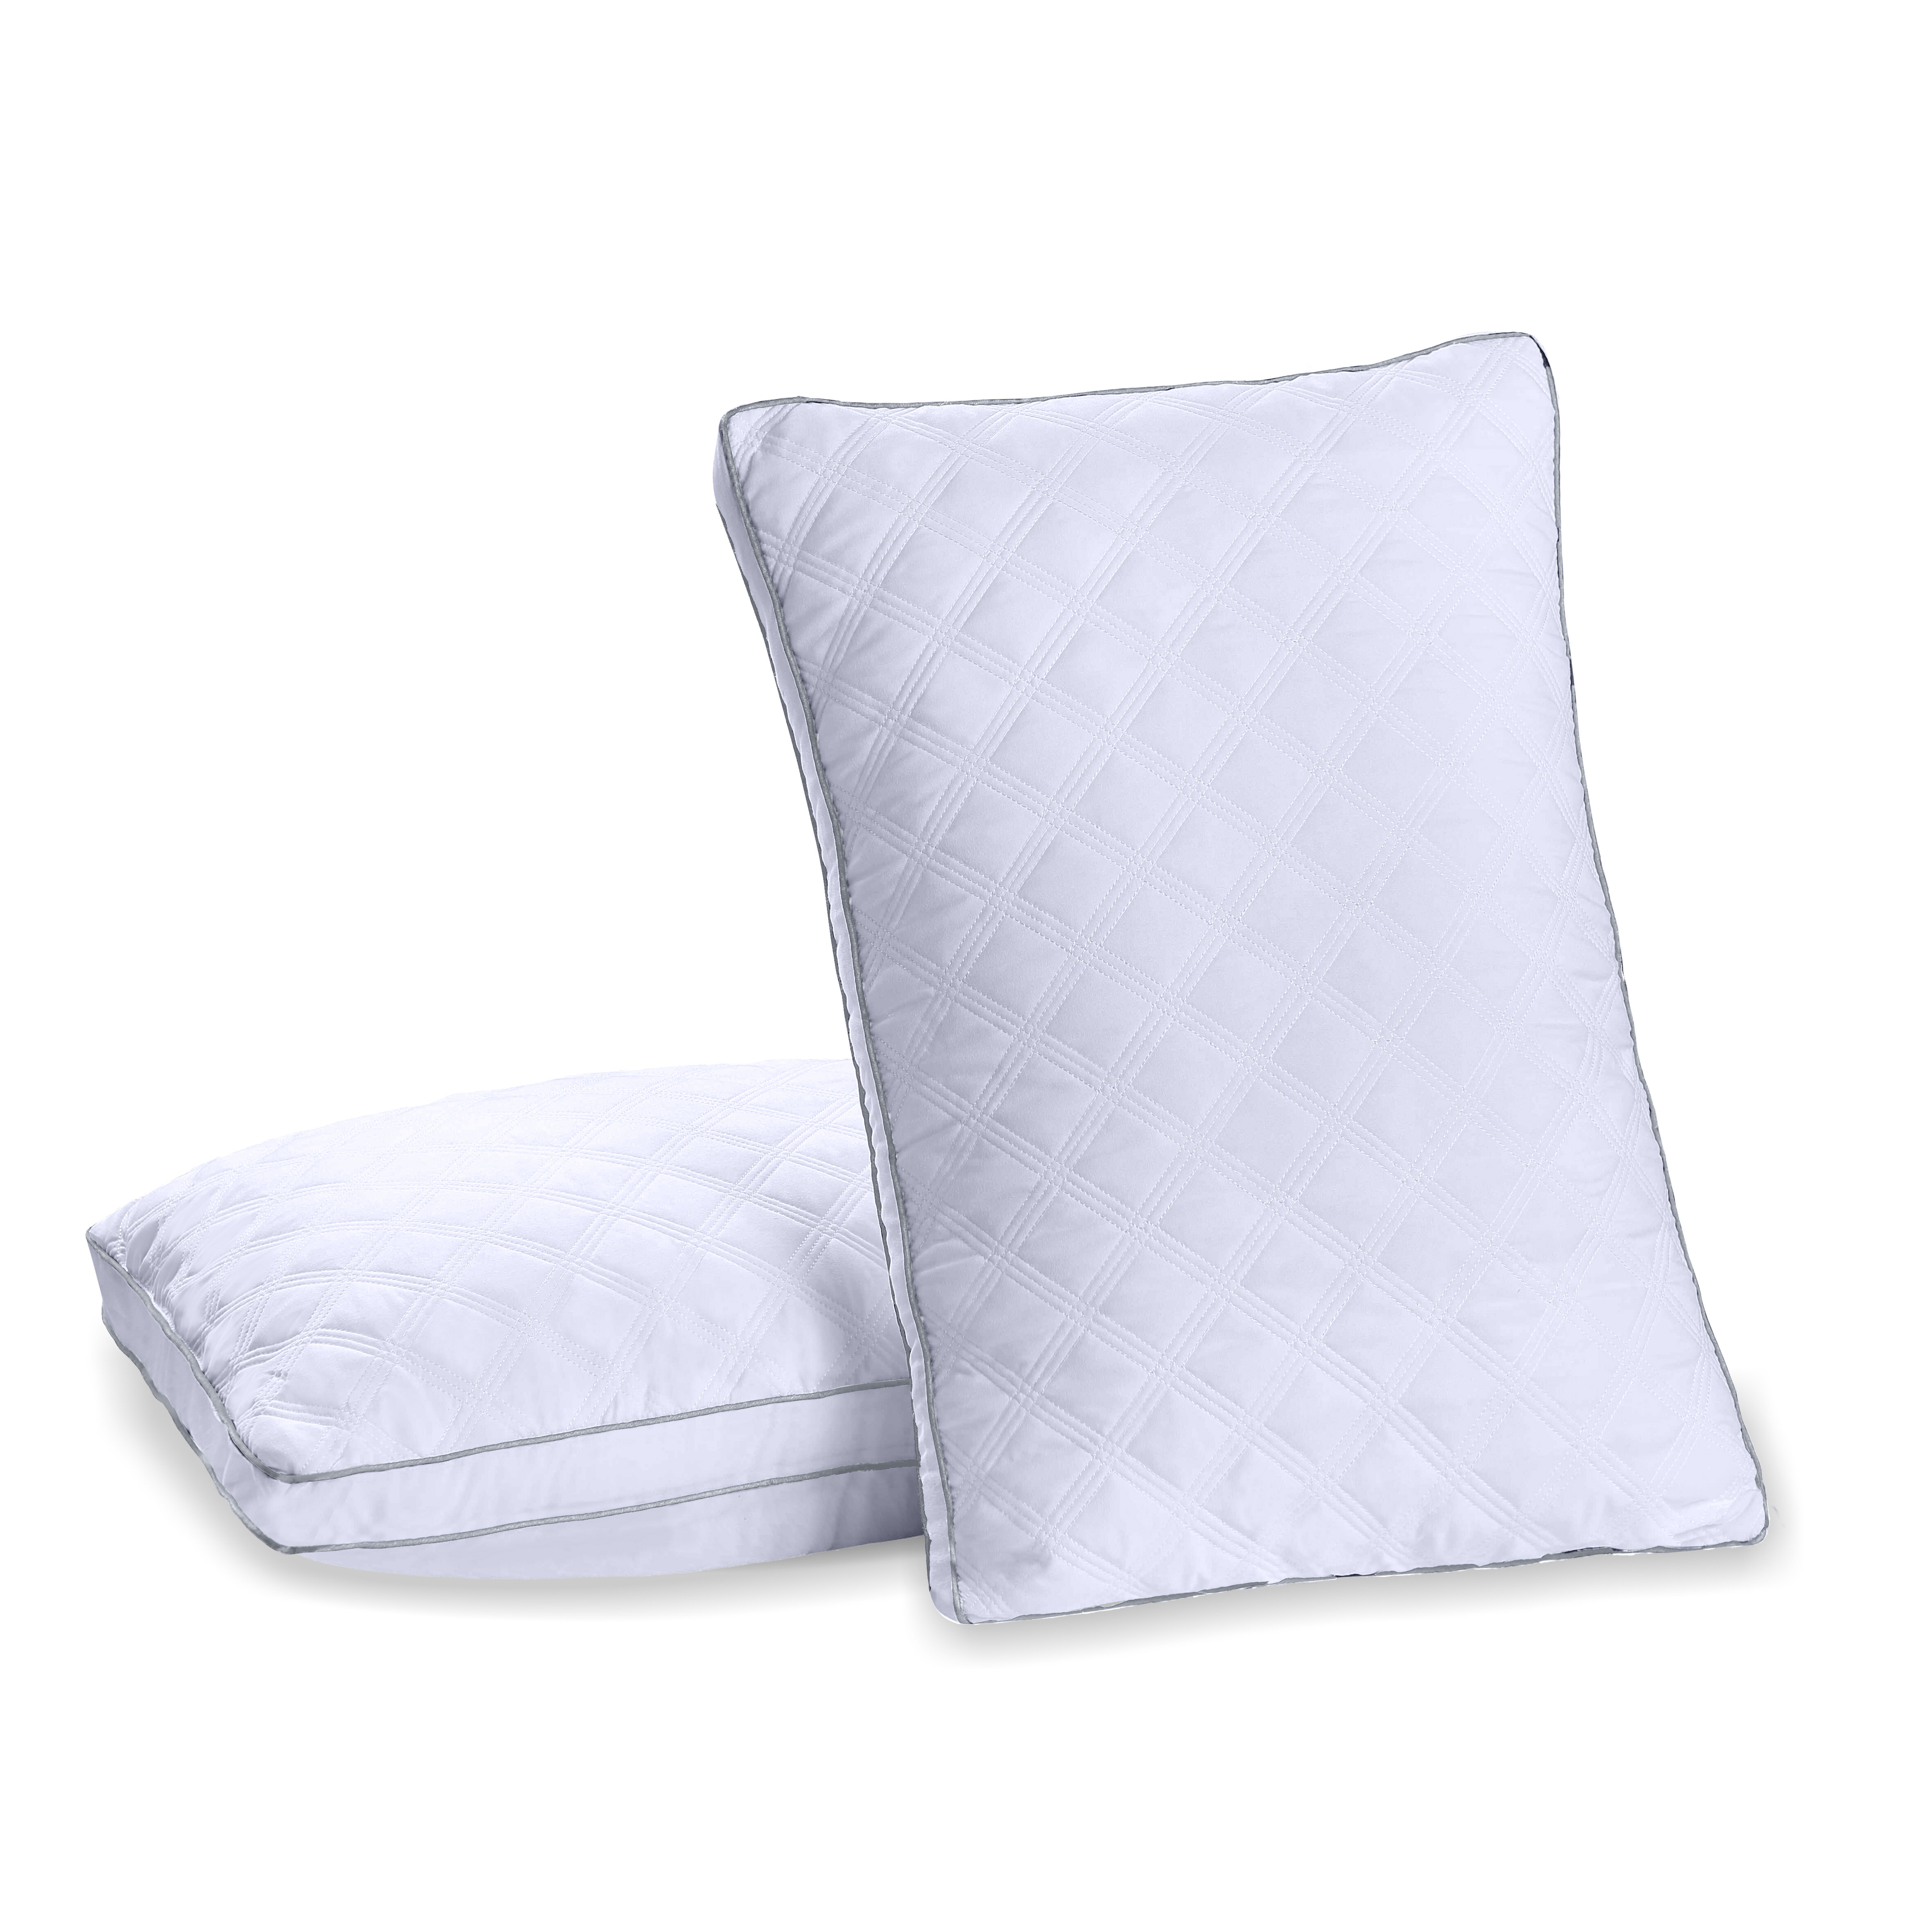 Luxury Plush Gel Bed Pillow For H Dreamnorth Premium Gel Pillow Loft Pack Of 2 